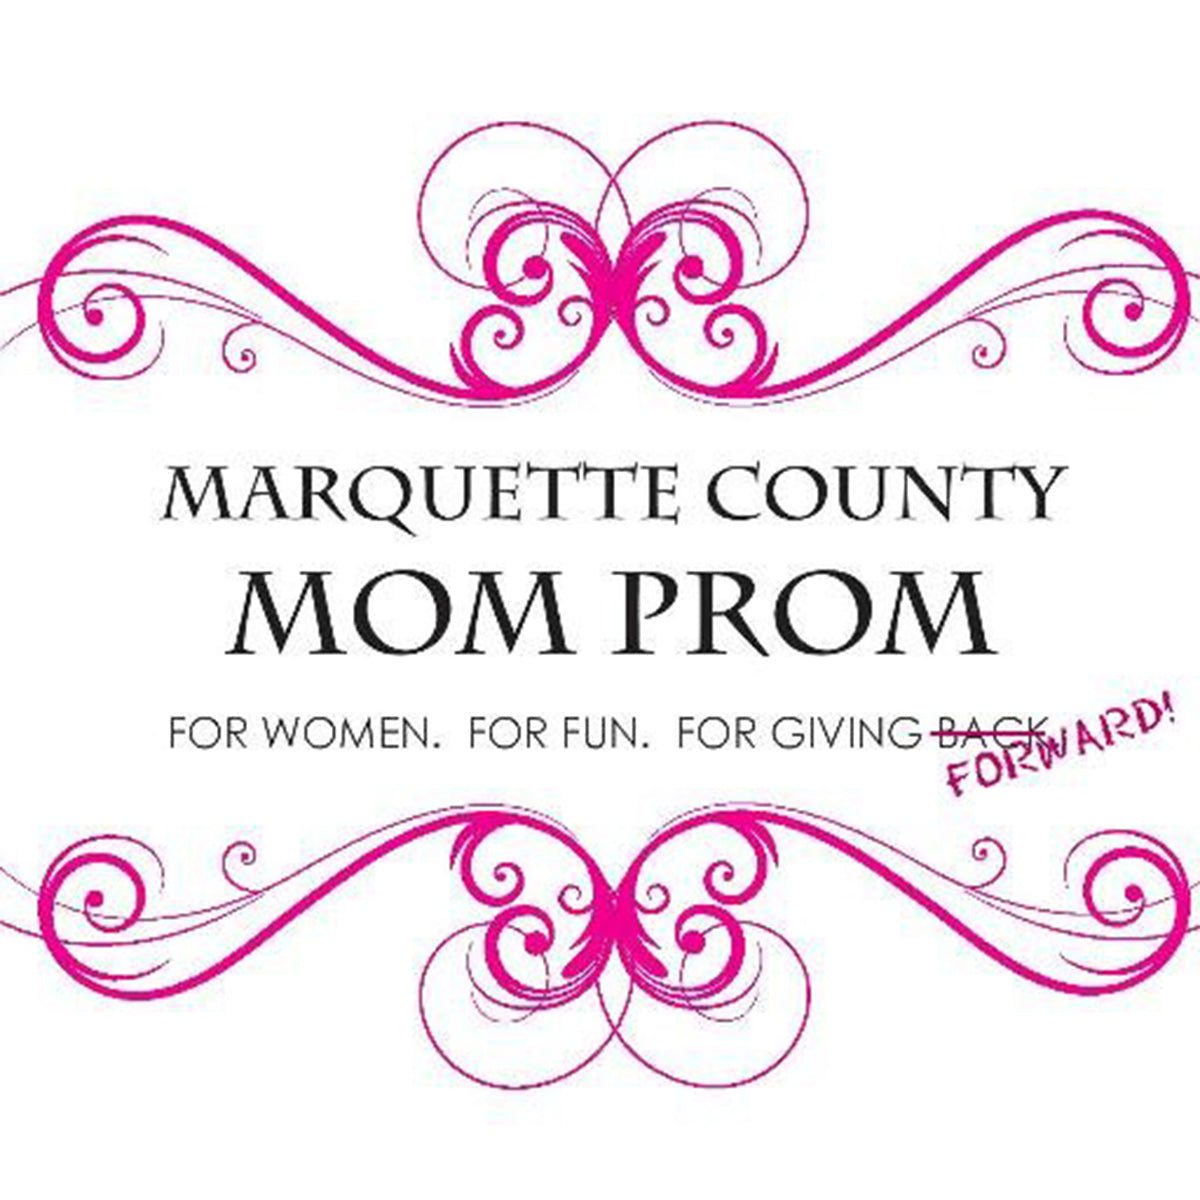 Marquette County Mom Prom